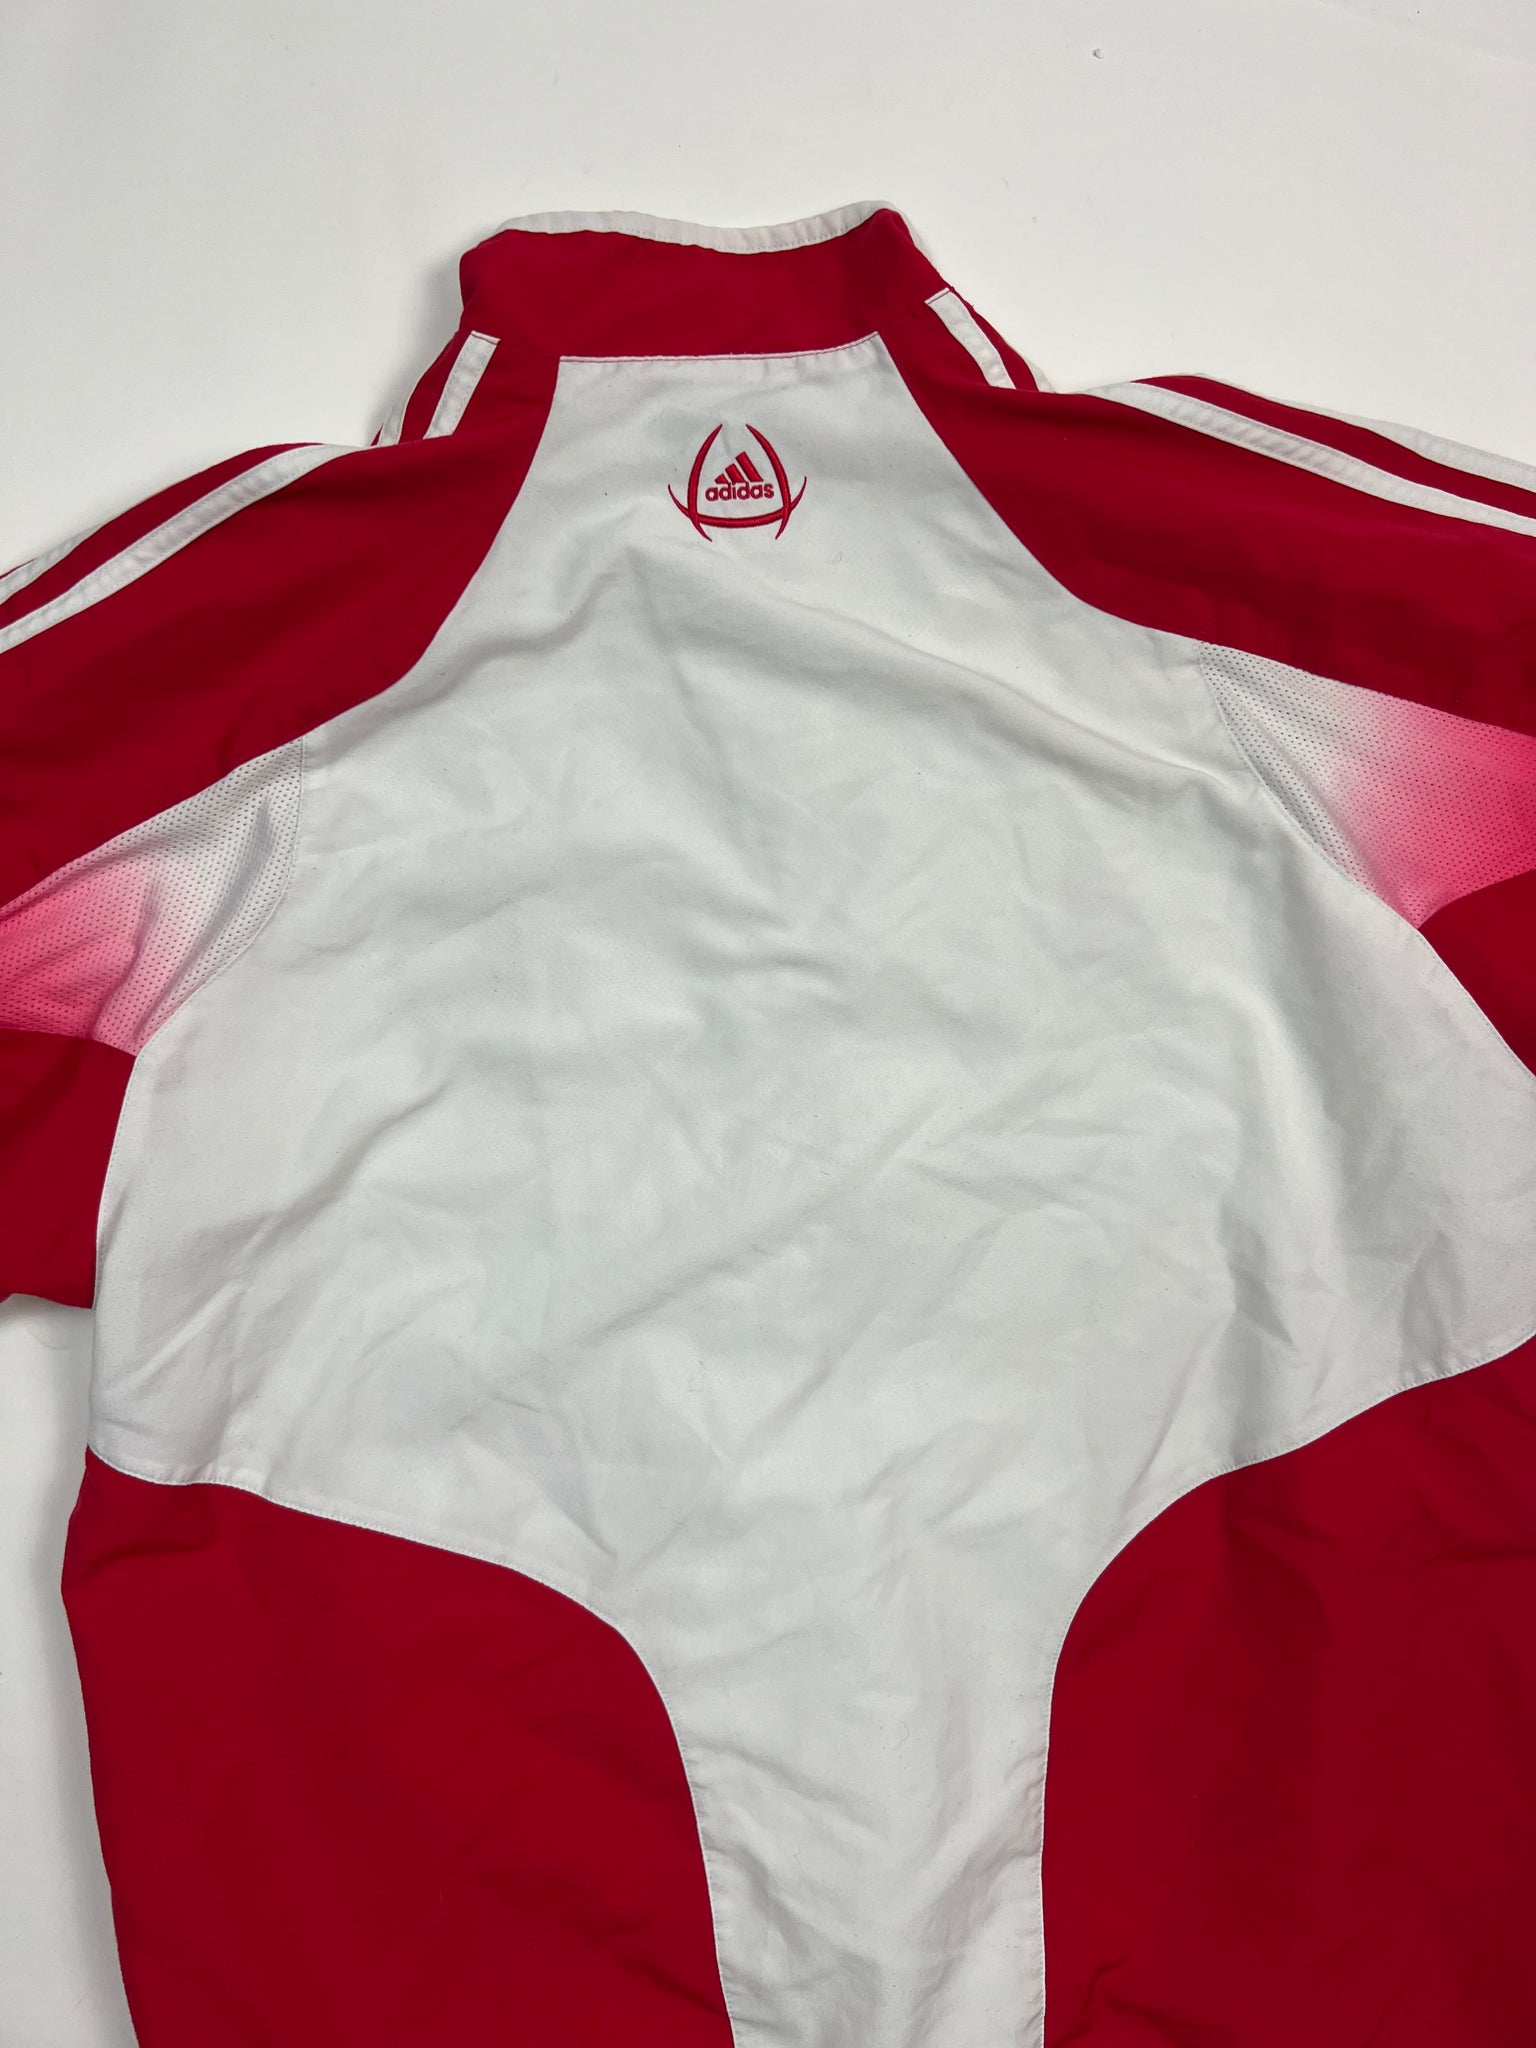 Adidas Ajax Amsterdam Track Jacket (M)